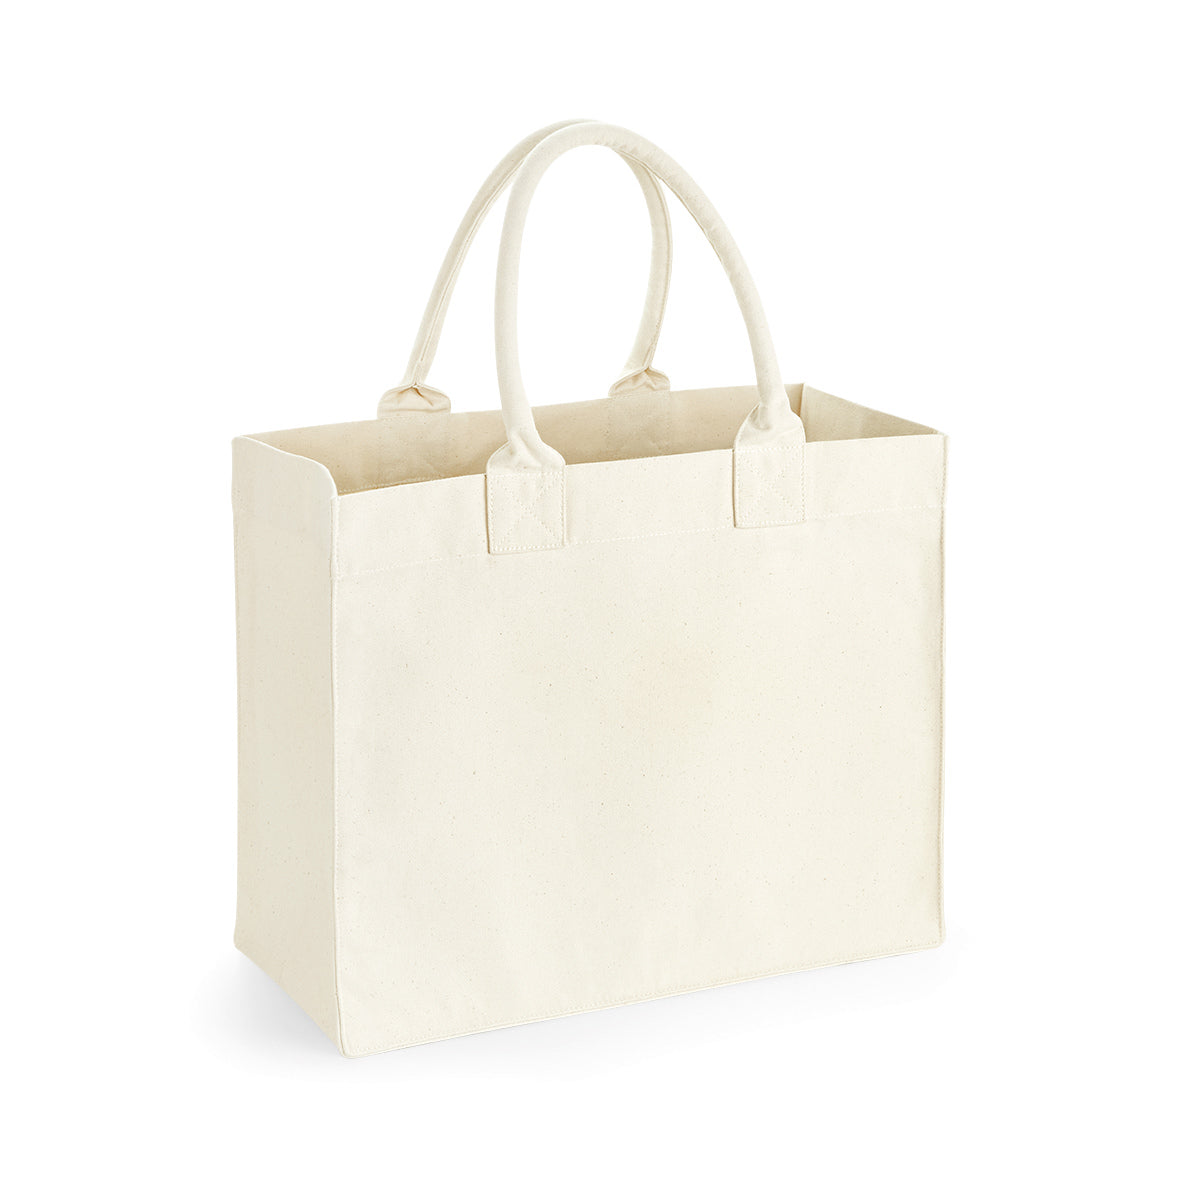 Design Your Own Cotton Canvas Tote Bag